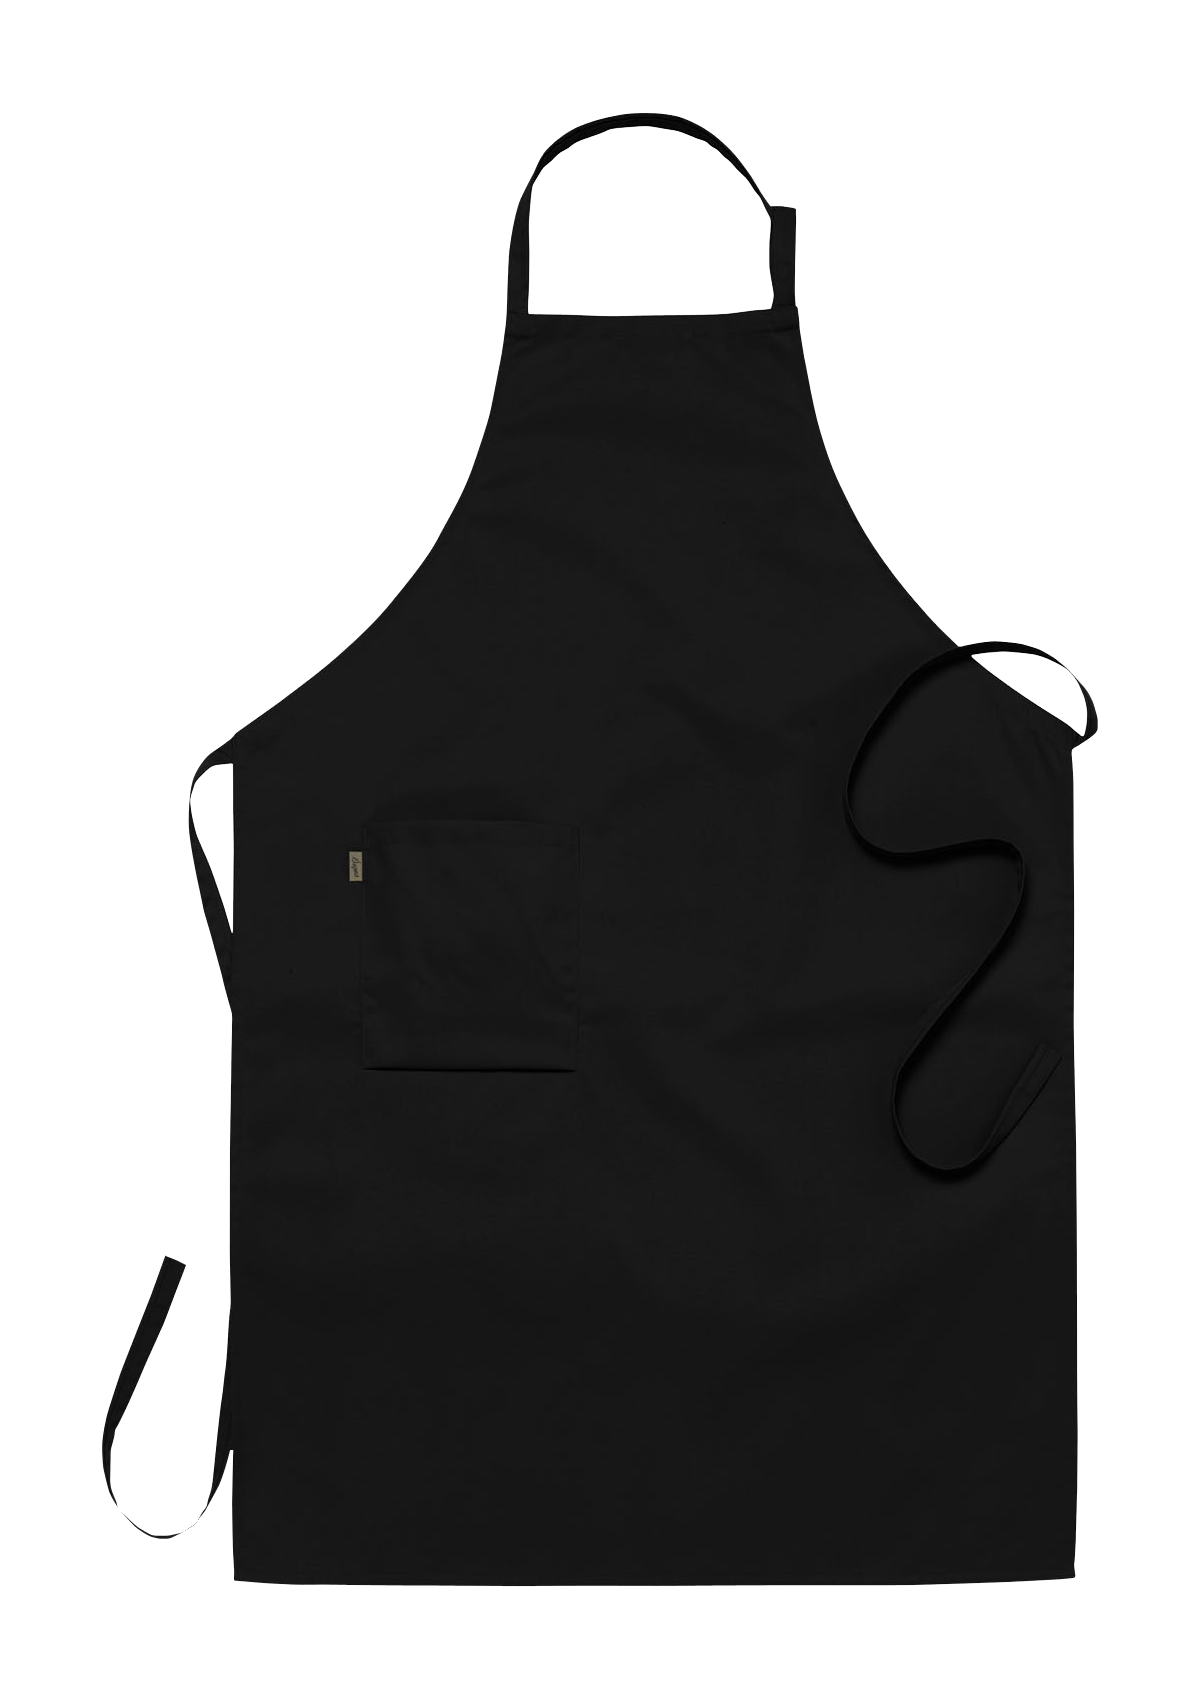 Bib apron With Adjustable Neck Strap Unisex